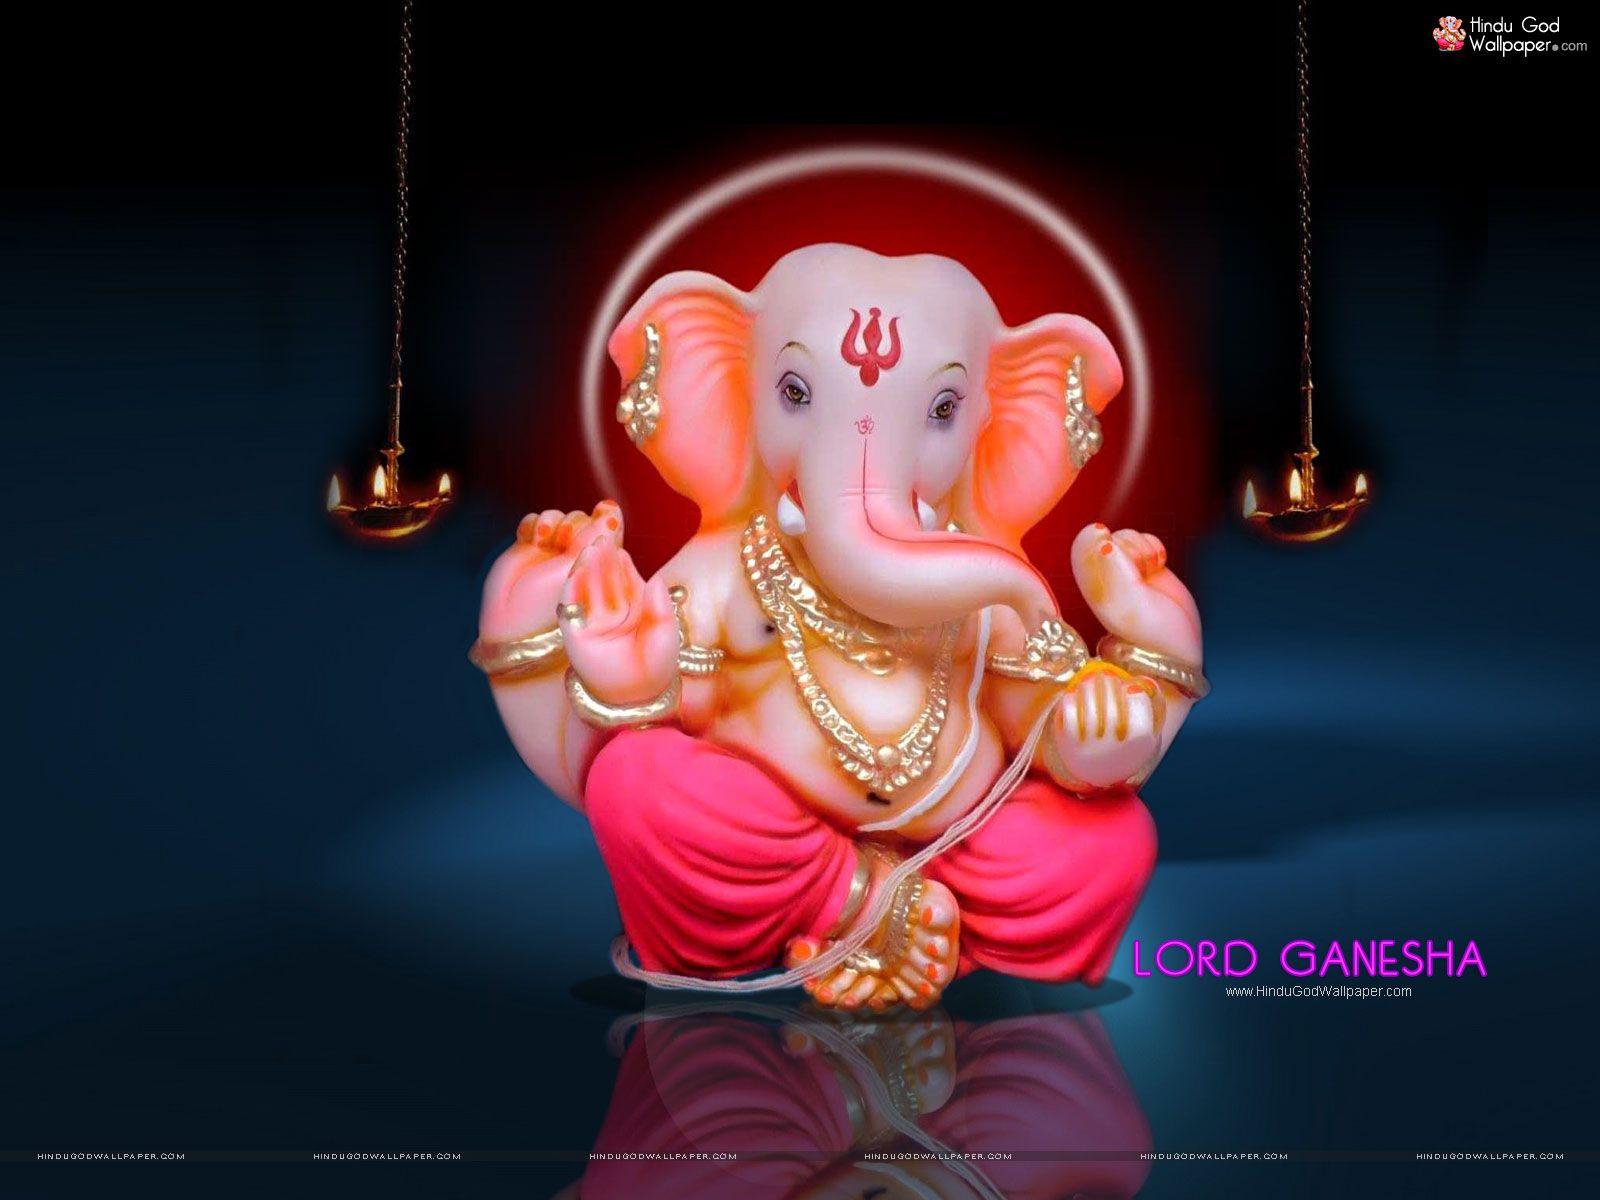 Ganesh image. Ganesh image, Ganesh wallpaper, Happy ganesh chaturthi